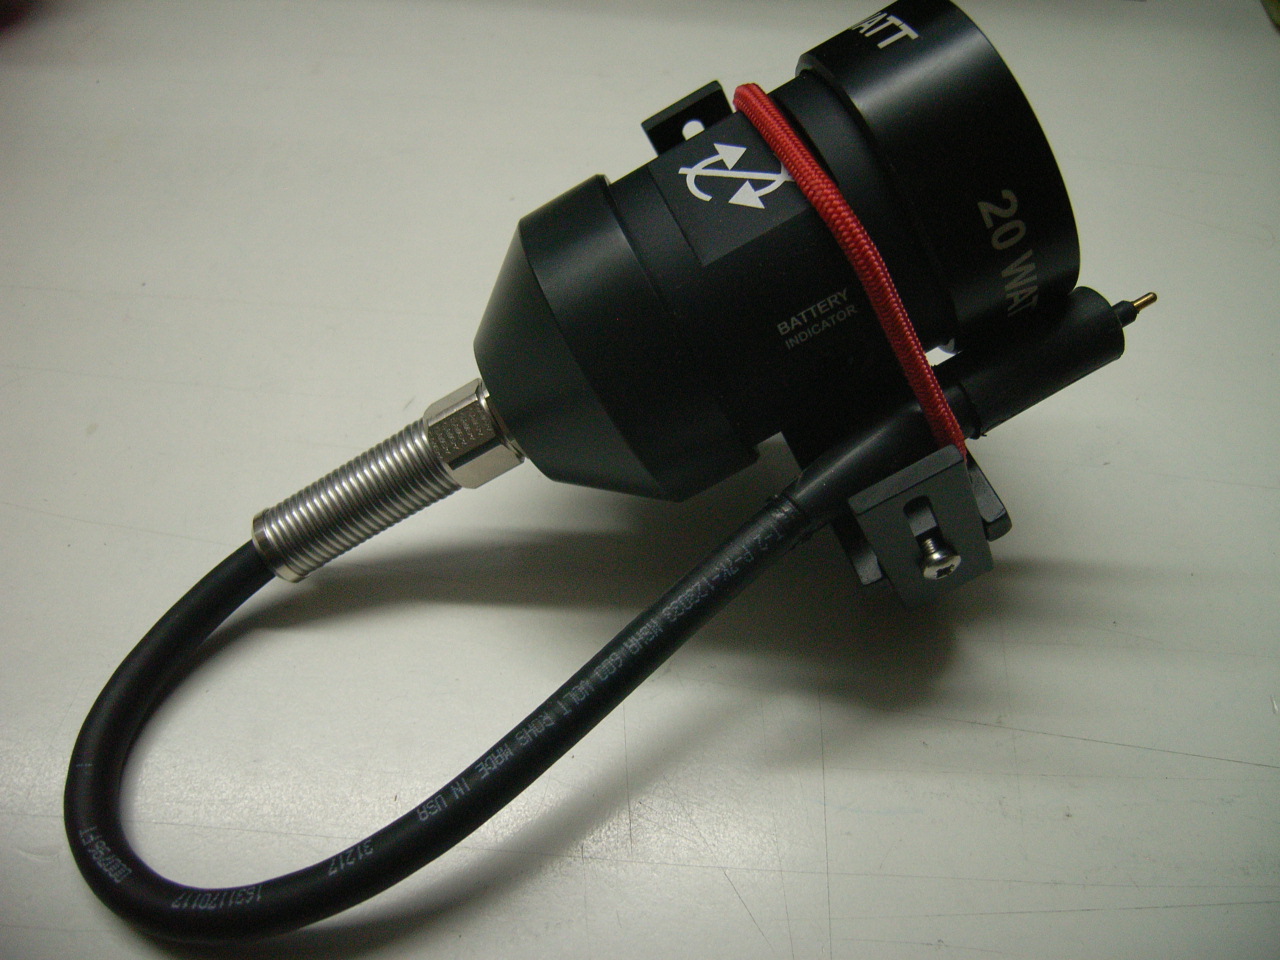 LED Akkutanklampe 20 W, 2 Piezo Schalter, 20,8 Ah Akku , nicht trennbares Kabel am Lampenkopf, 1x E/O Cord 65cm für Heizung